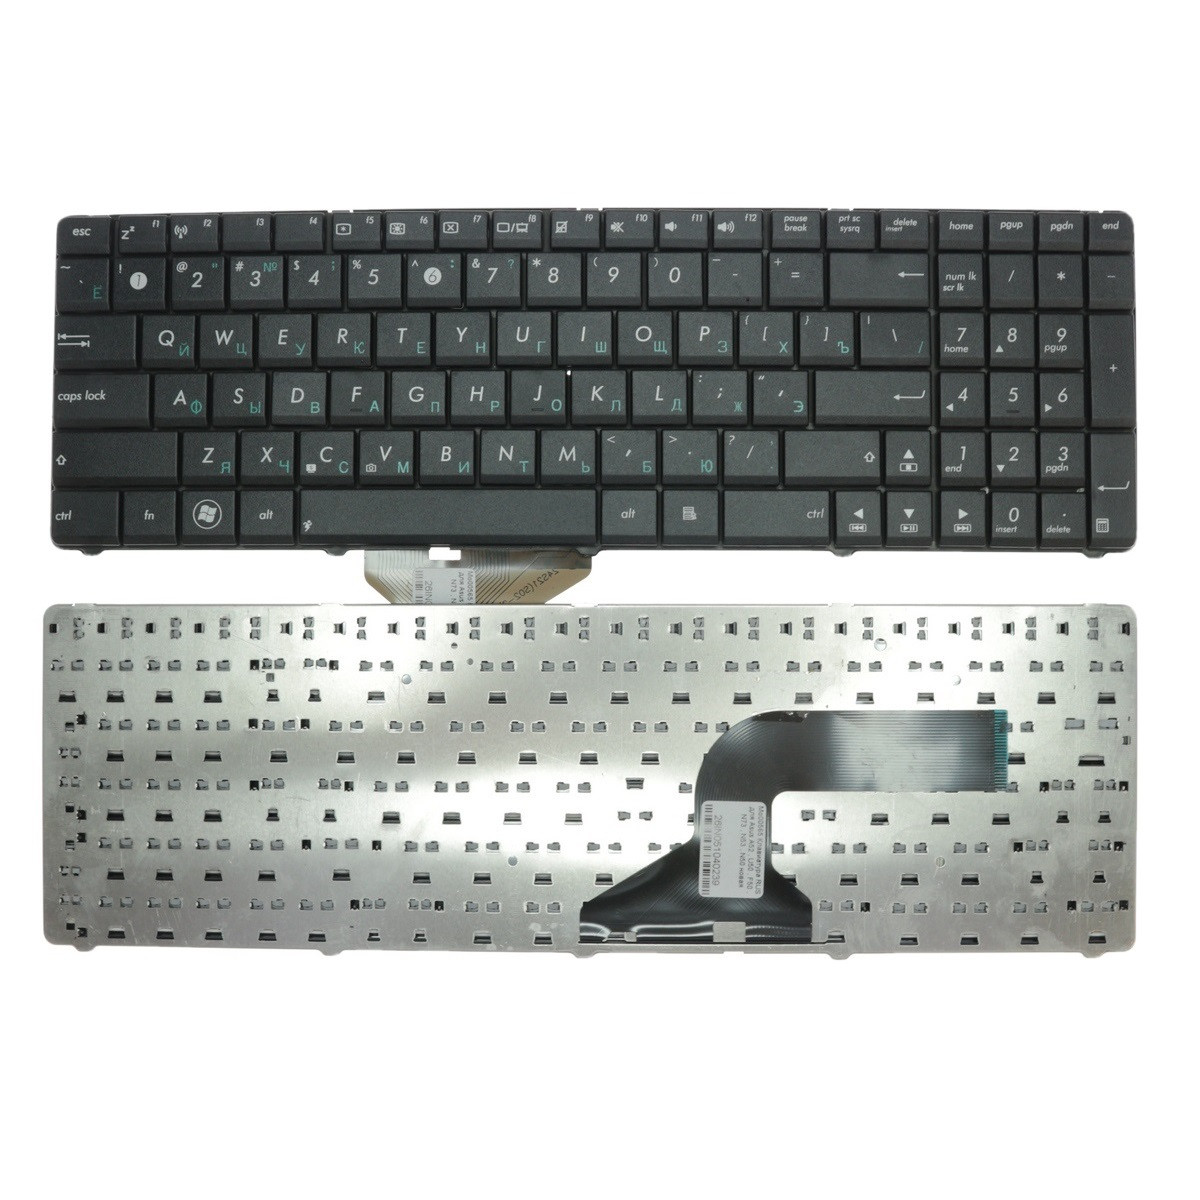 Клавиатура для ноутбука Asus U50F U50VG UL50 UL50A черная